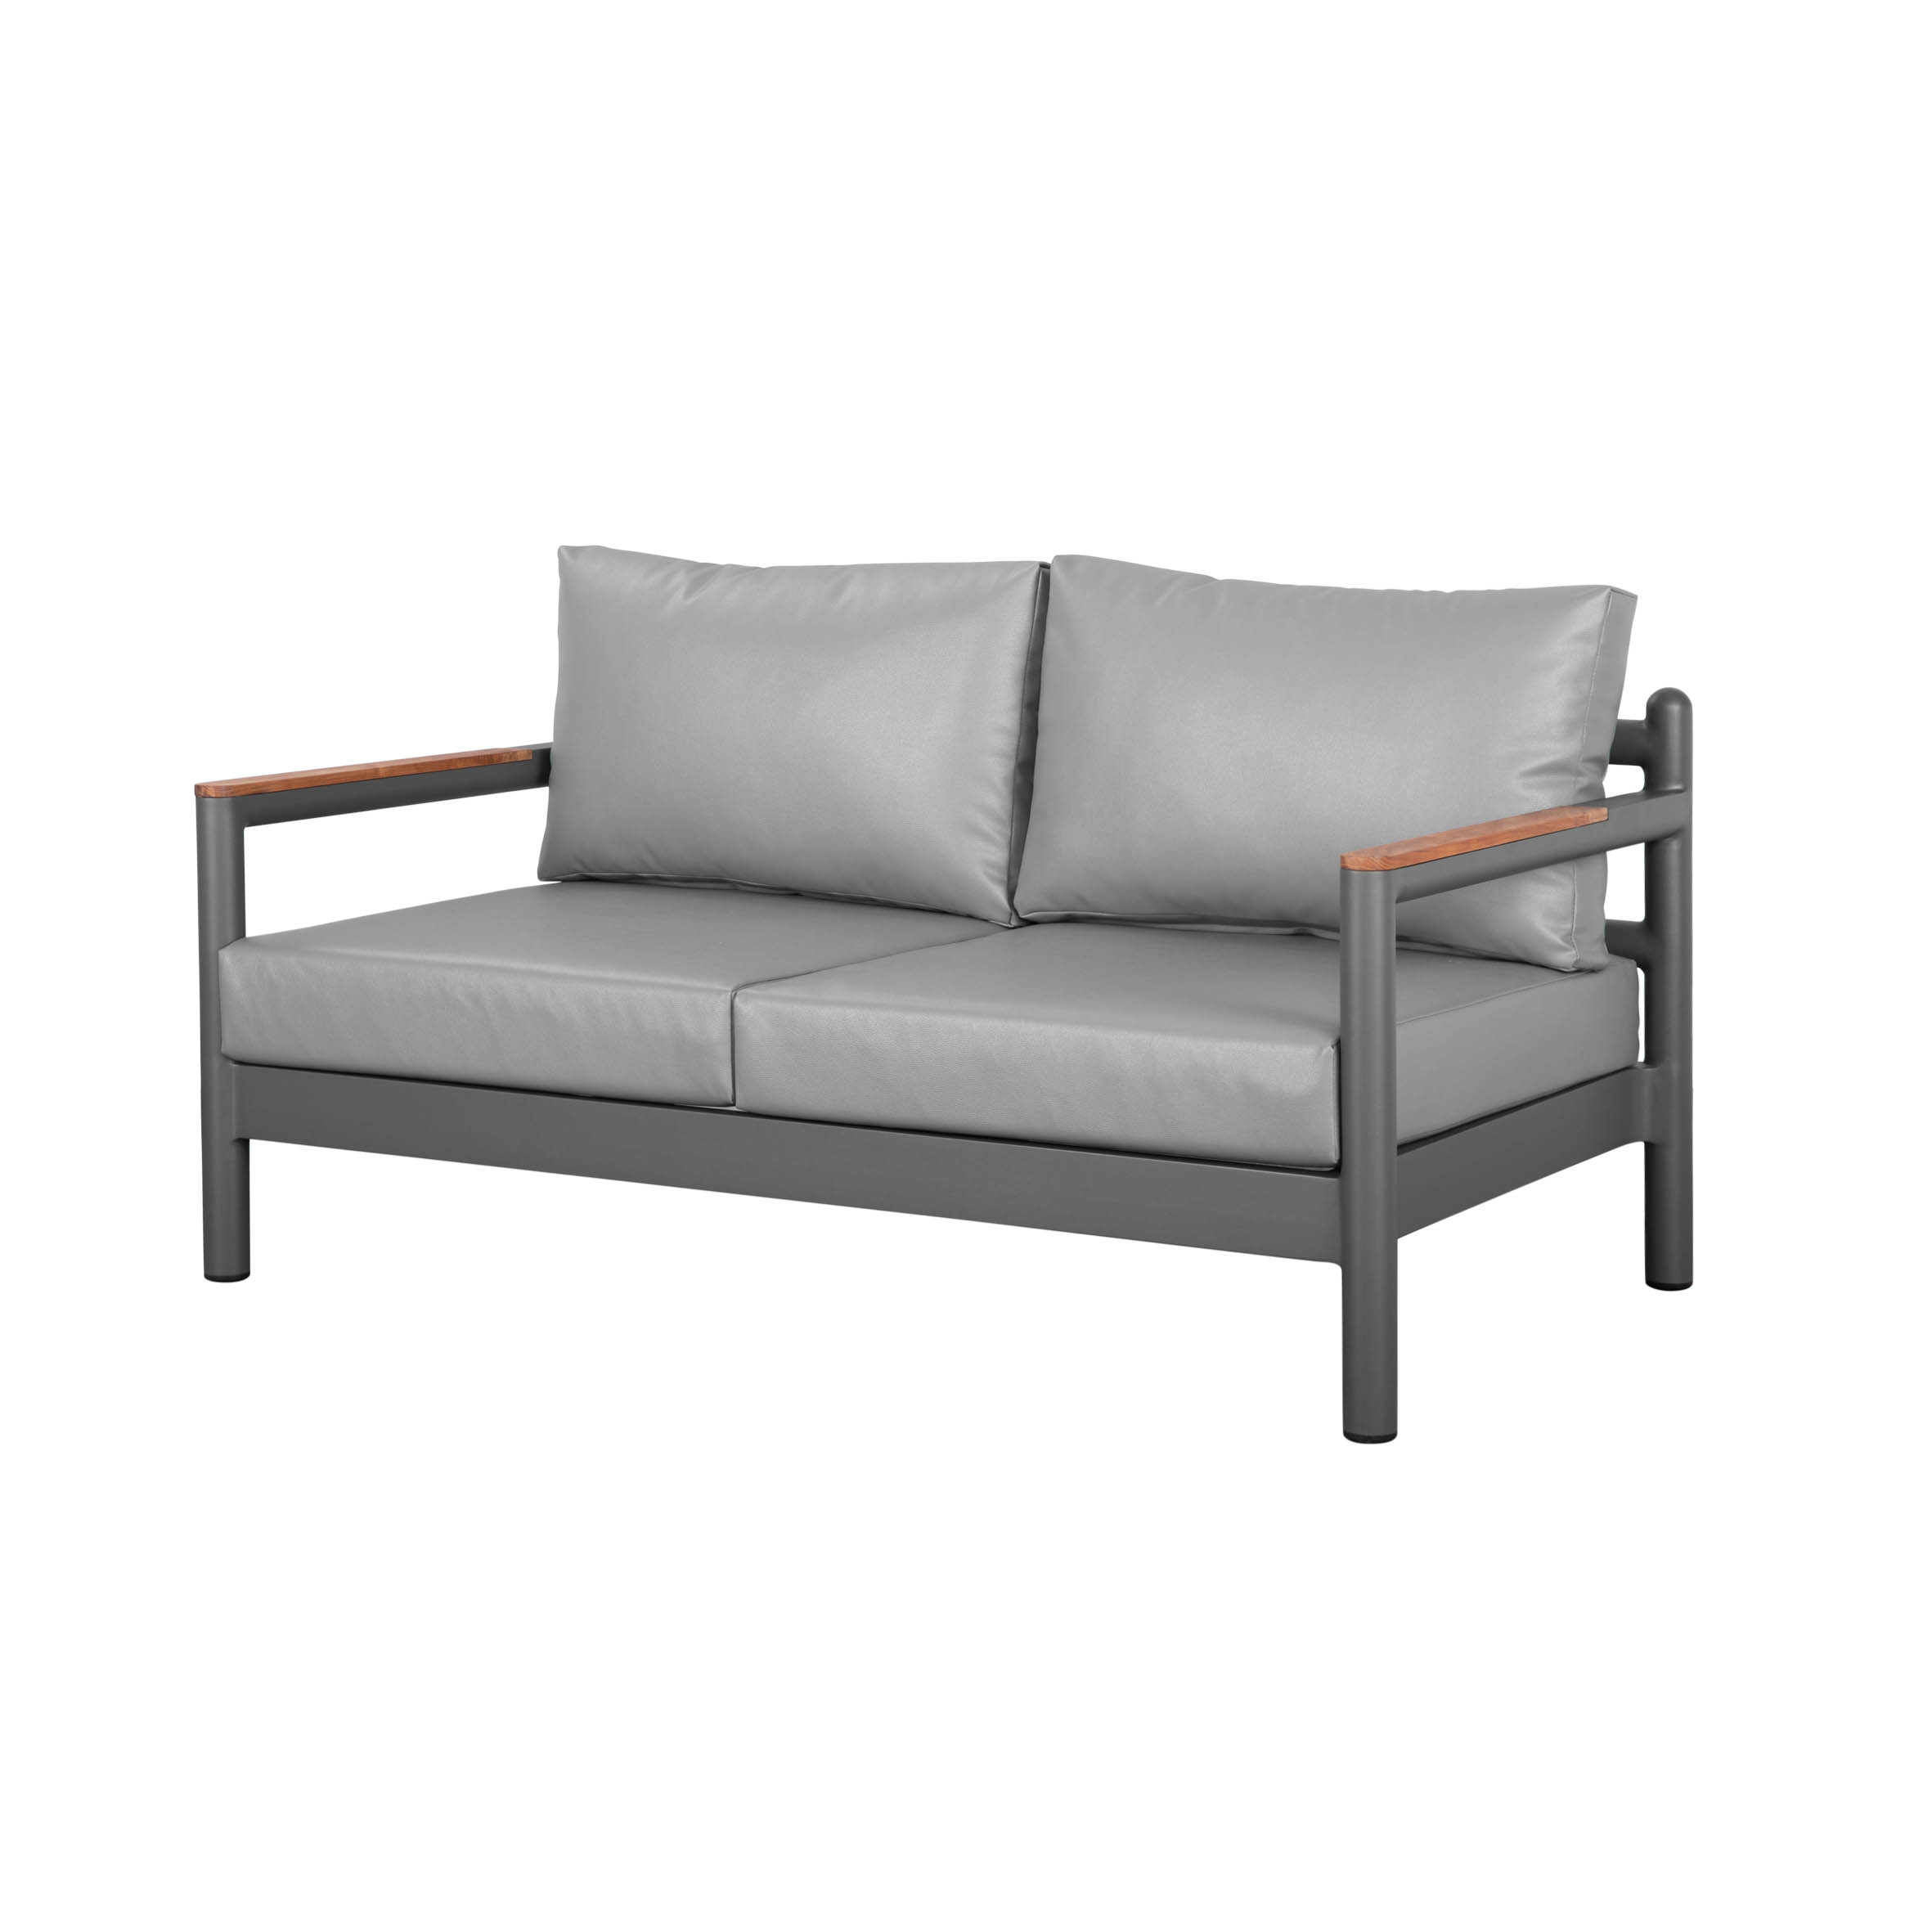 Armani 2-seat sofa S1